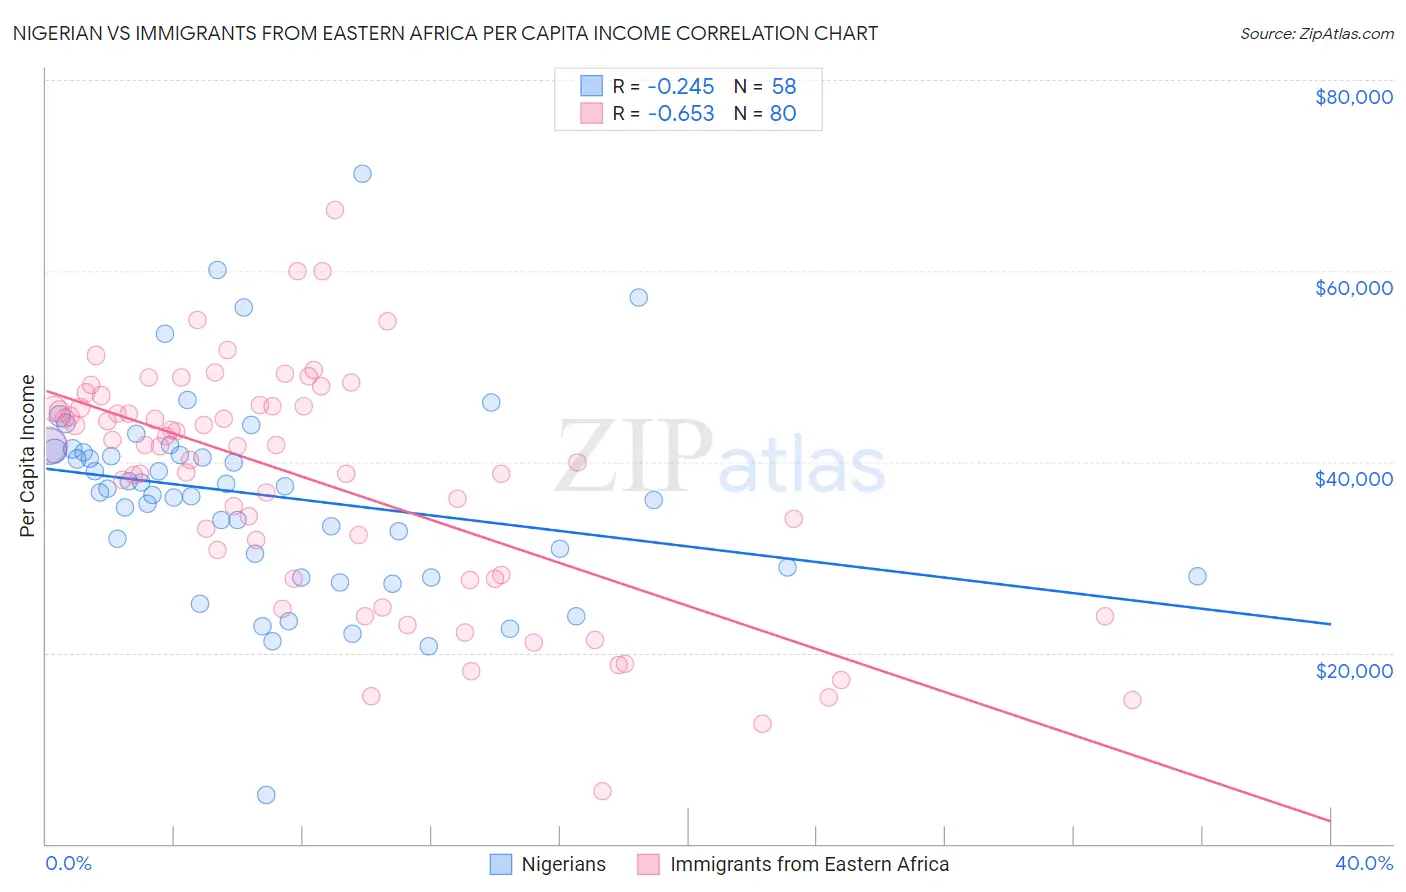 Nigerian vs Immigrants from Eastern Africa Per Capita Income